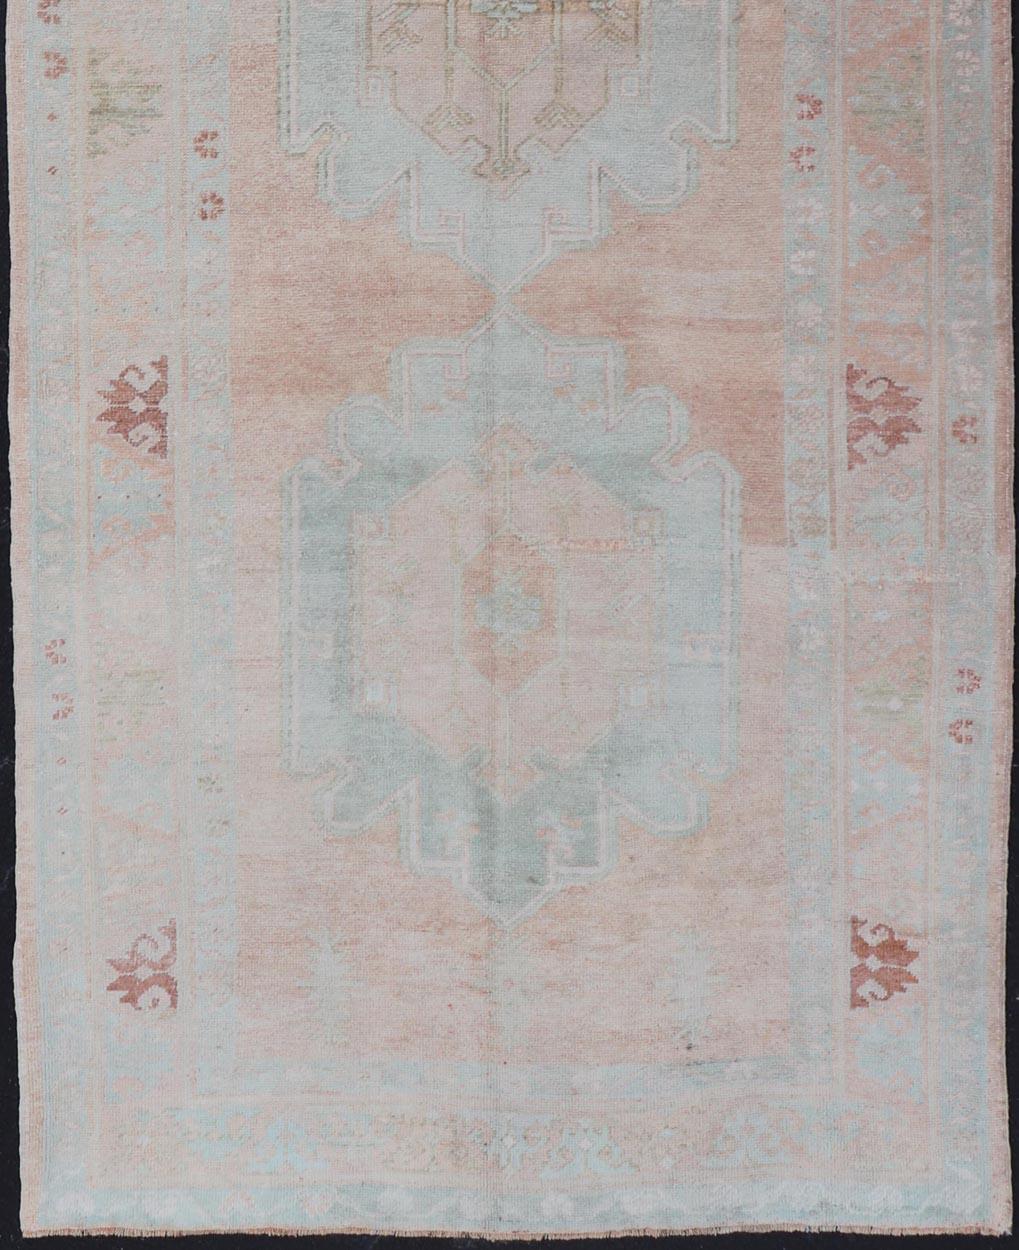 Vintage Oushak gallery rug from Turkey in with flower motifs, rug TU-MTU-7, country of origin / type: Turkey / Oushak, circa 1950

Measures: 4'7 x 11'10.